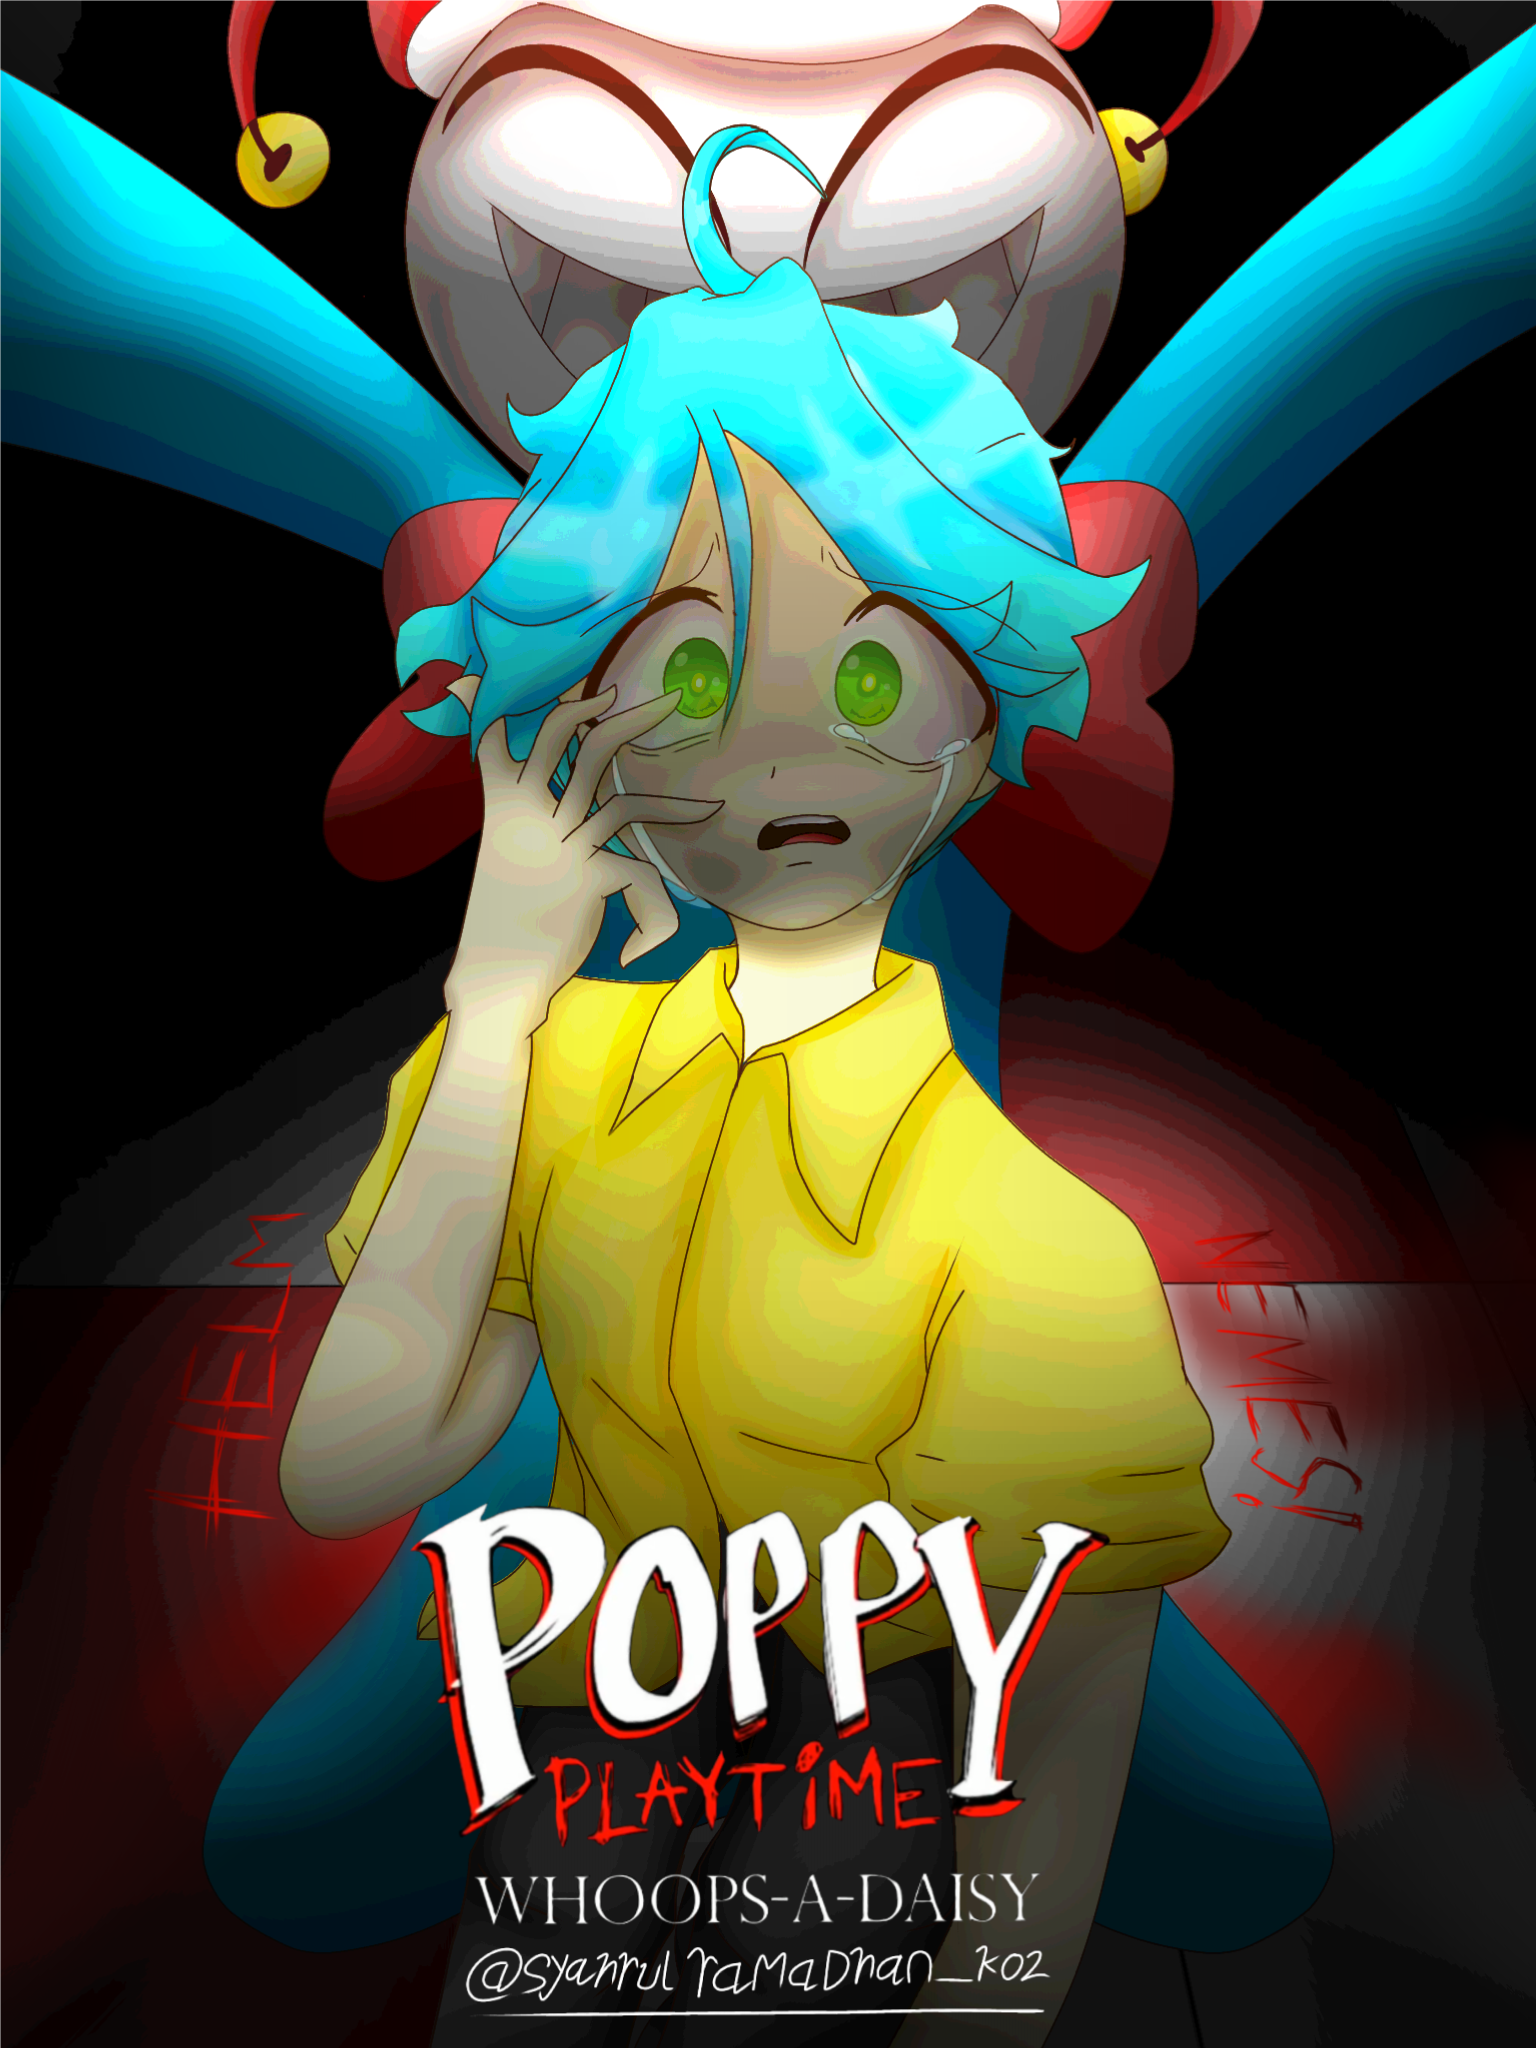 Poppy Playtime chapter 3? Fens! by SyahrulRamadhank02 on DeviantArt